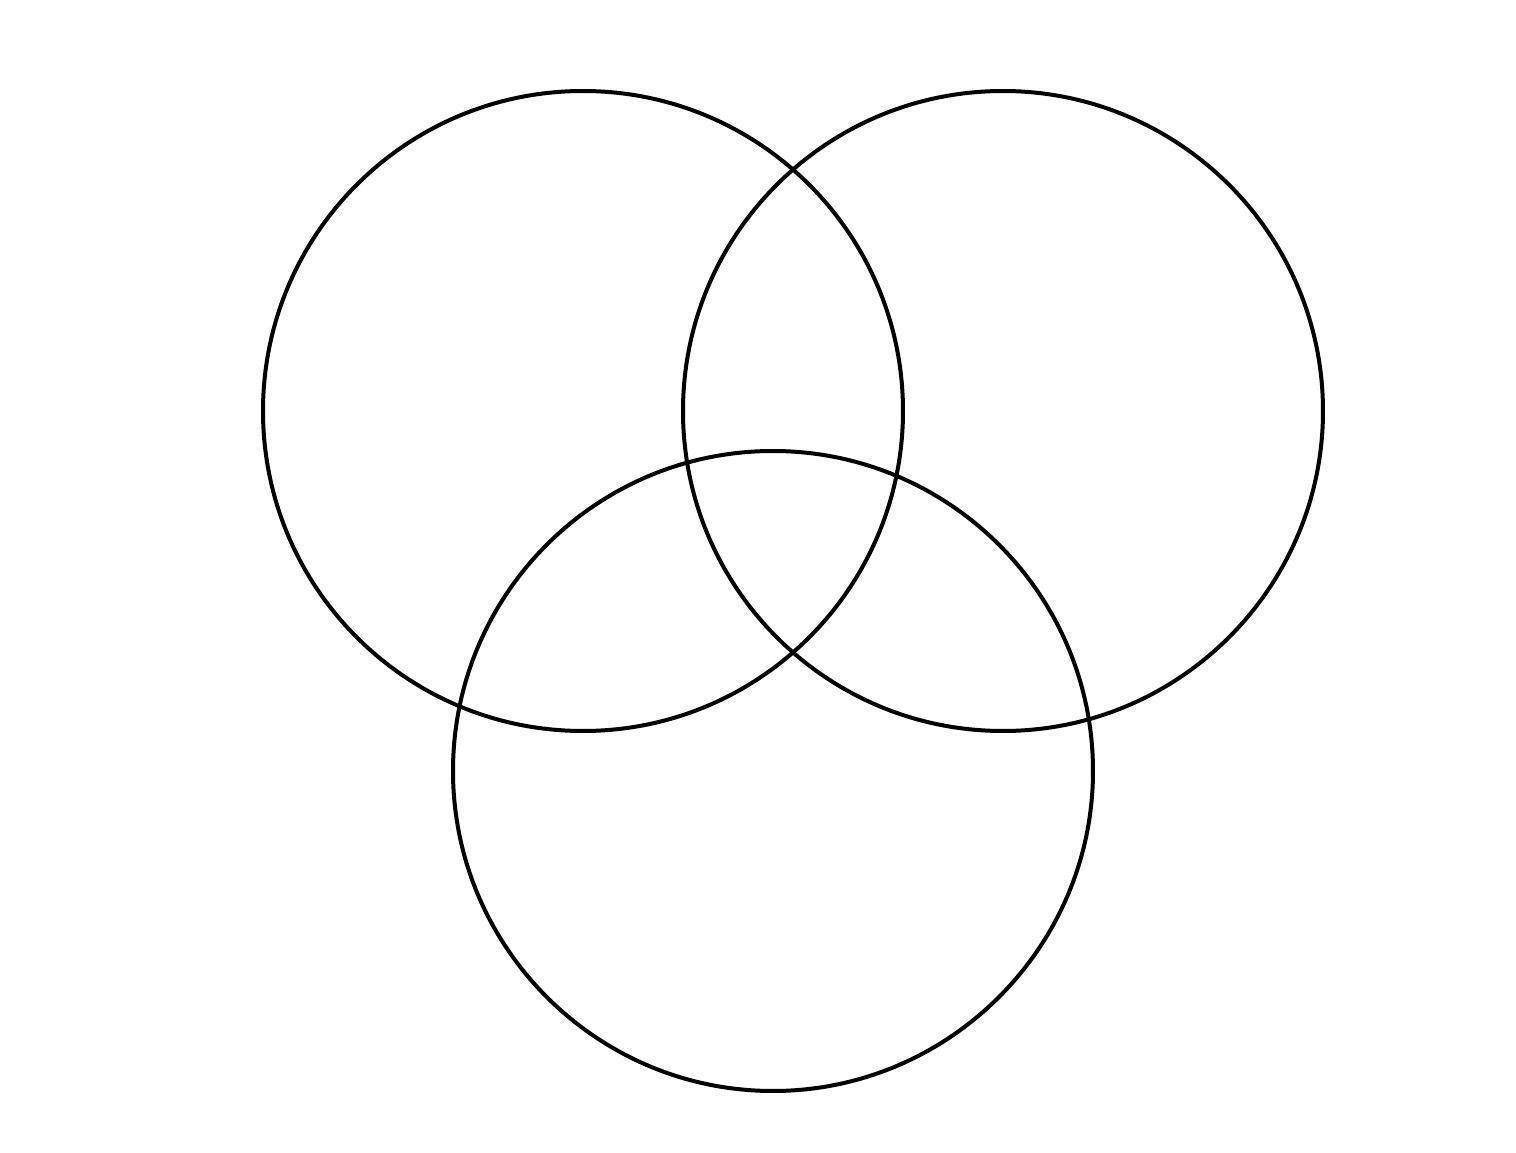 8 13 круга. Круги Эйлера. Круги Эйлера Венна. Venn diagram 3. Диаграмма Венна три круга.